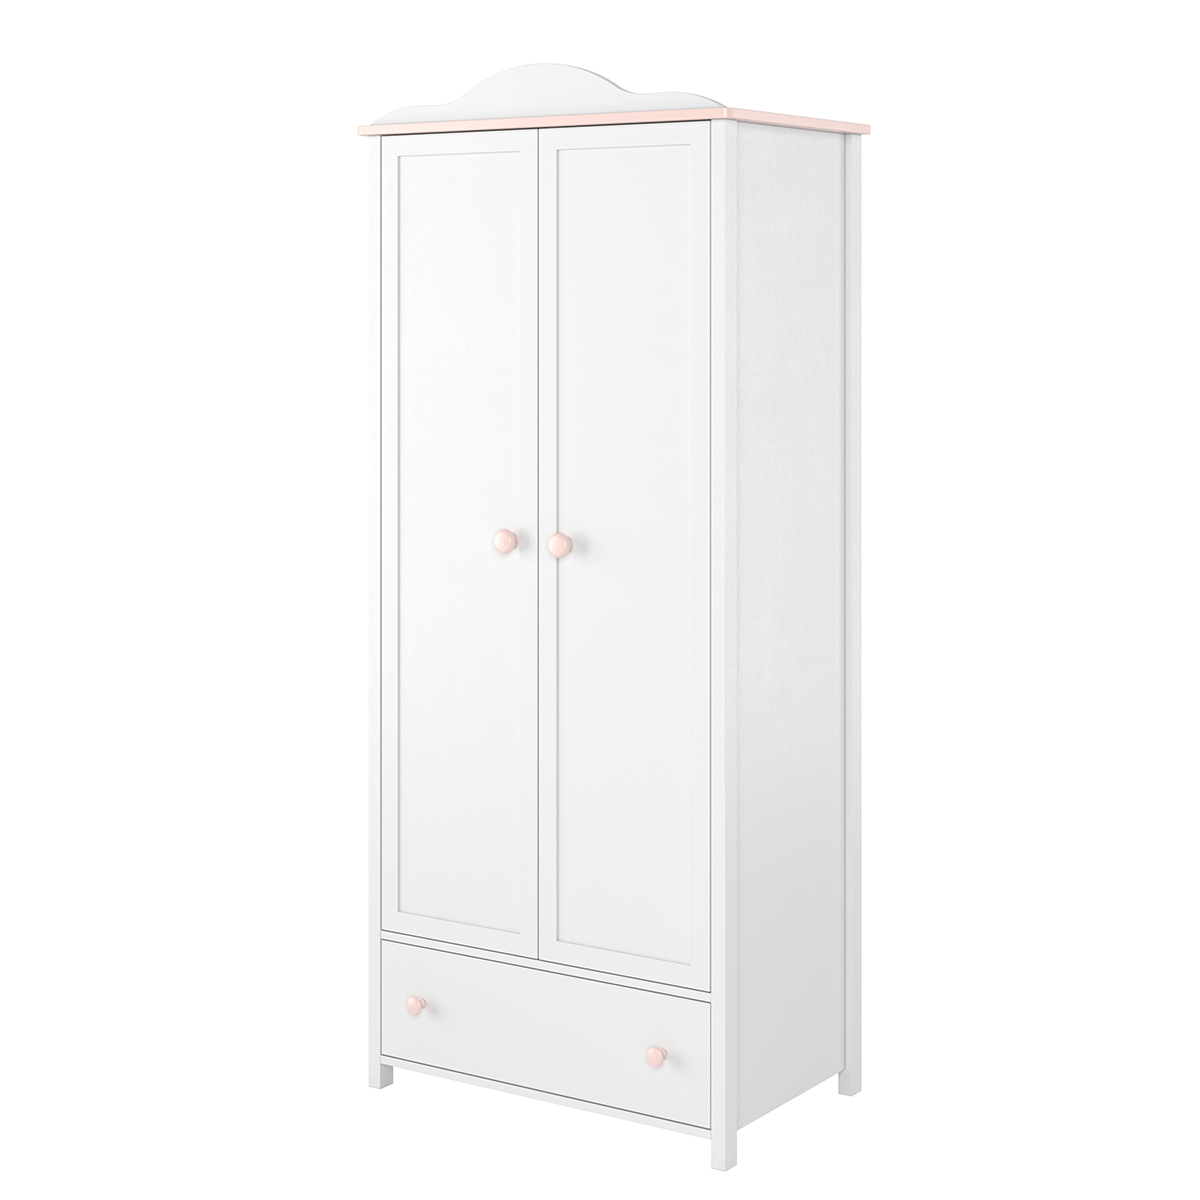 petits-meubles-alissa-LN12BR-armoire-2-portes-1-tiroir-blanc-rose-01